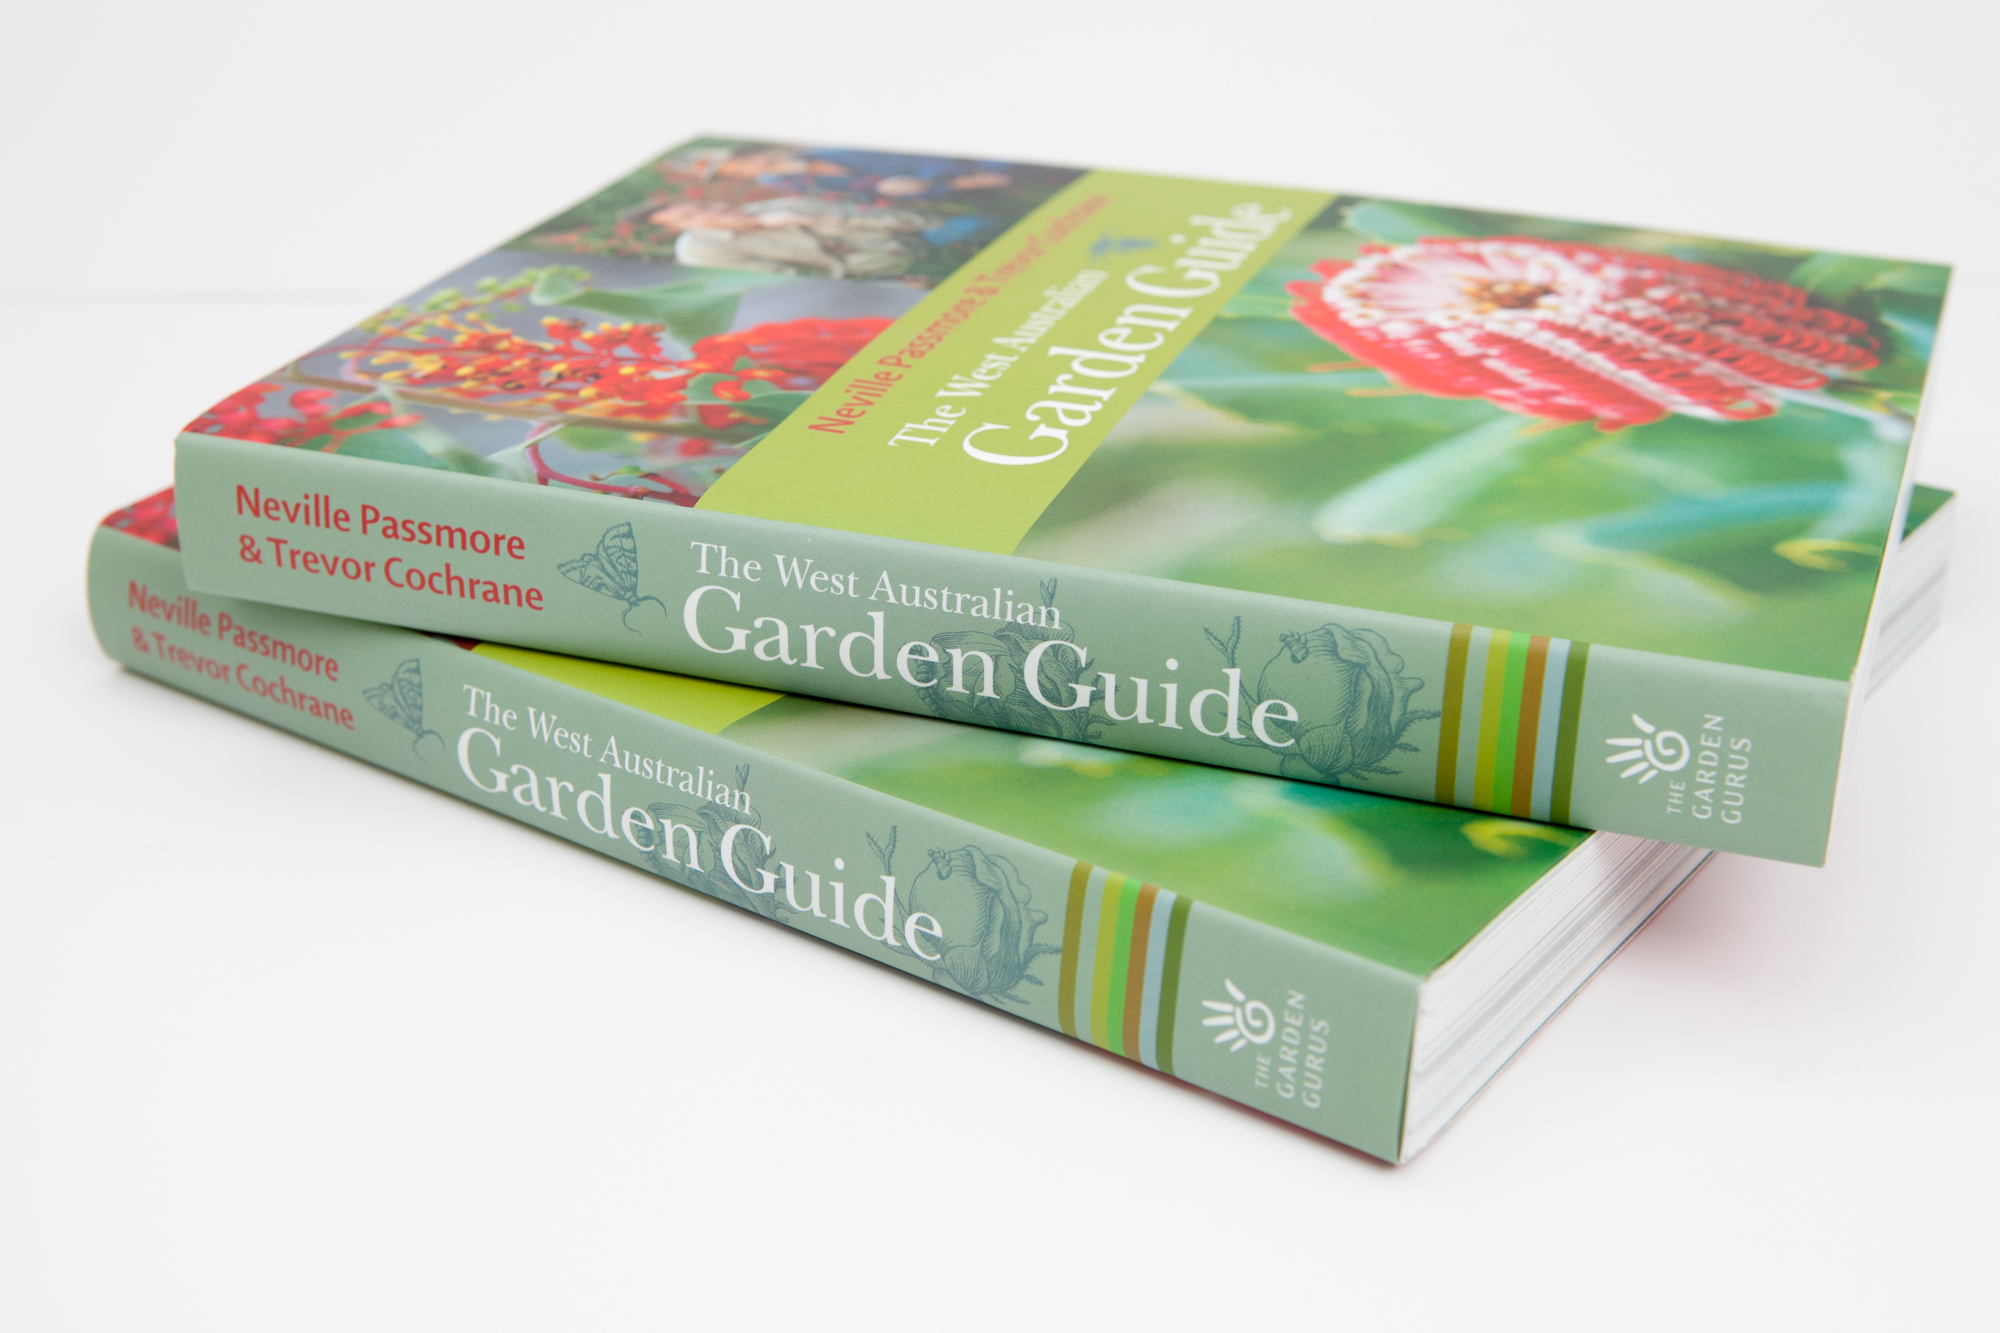 The West Australian Garden Guide